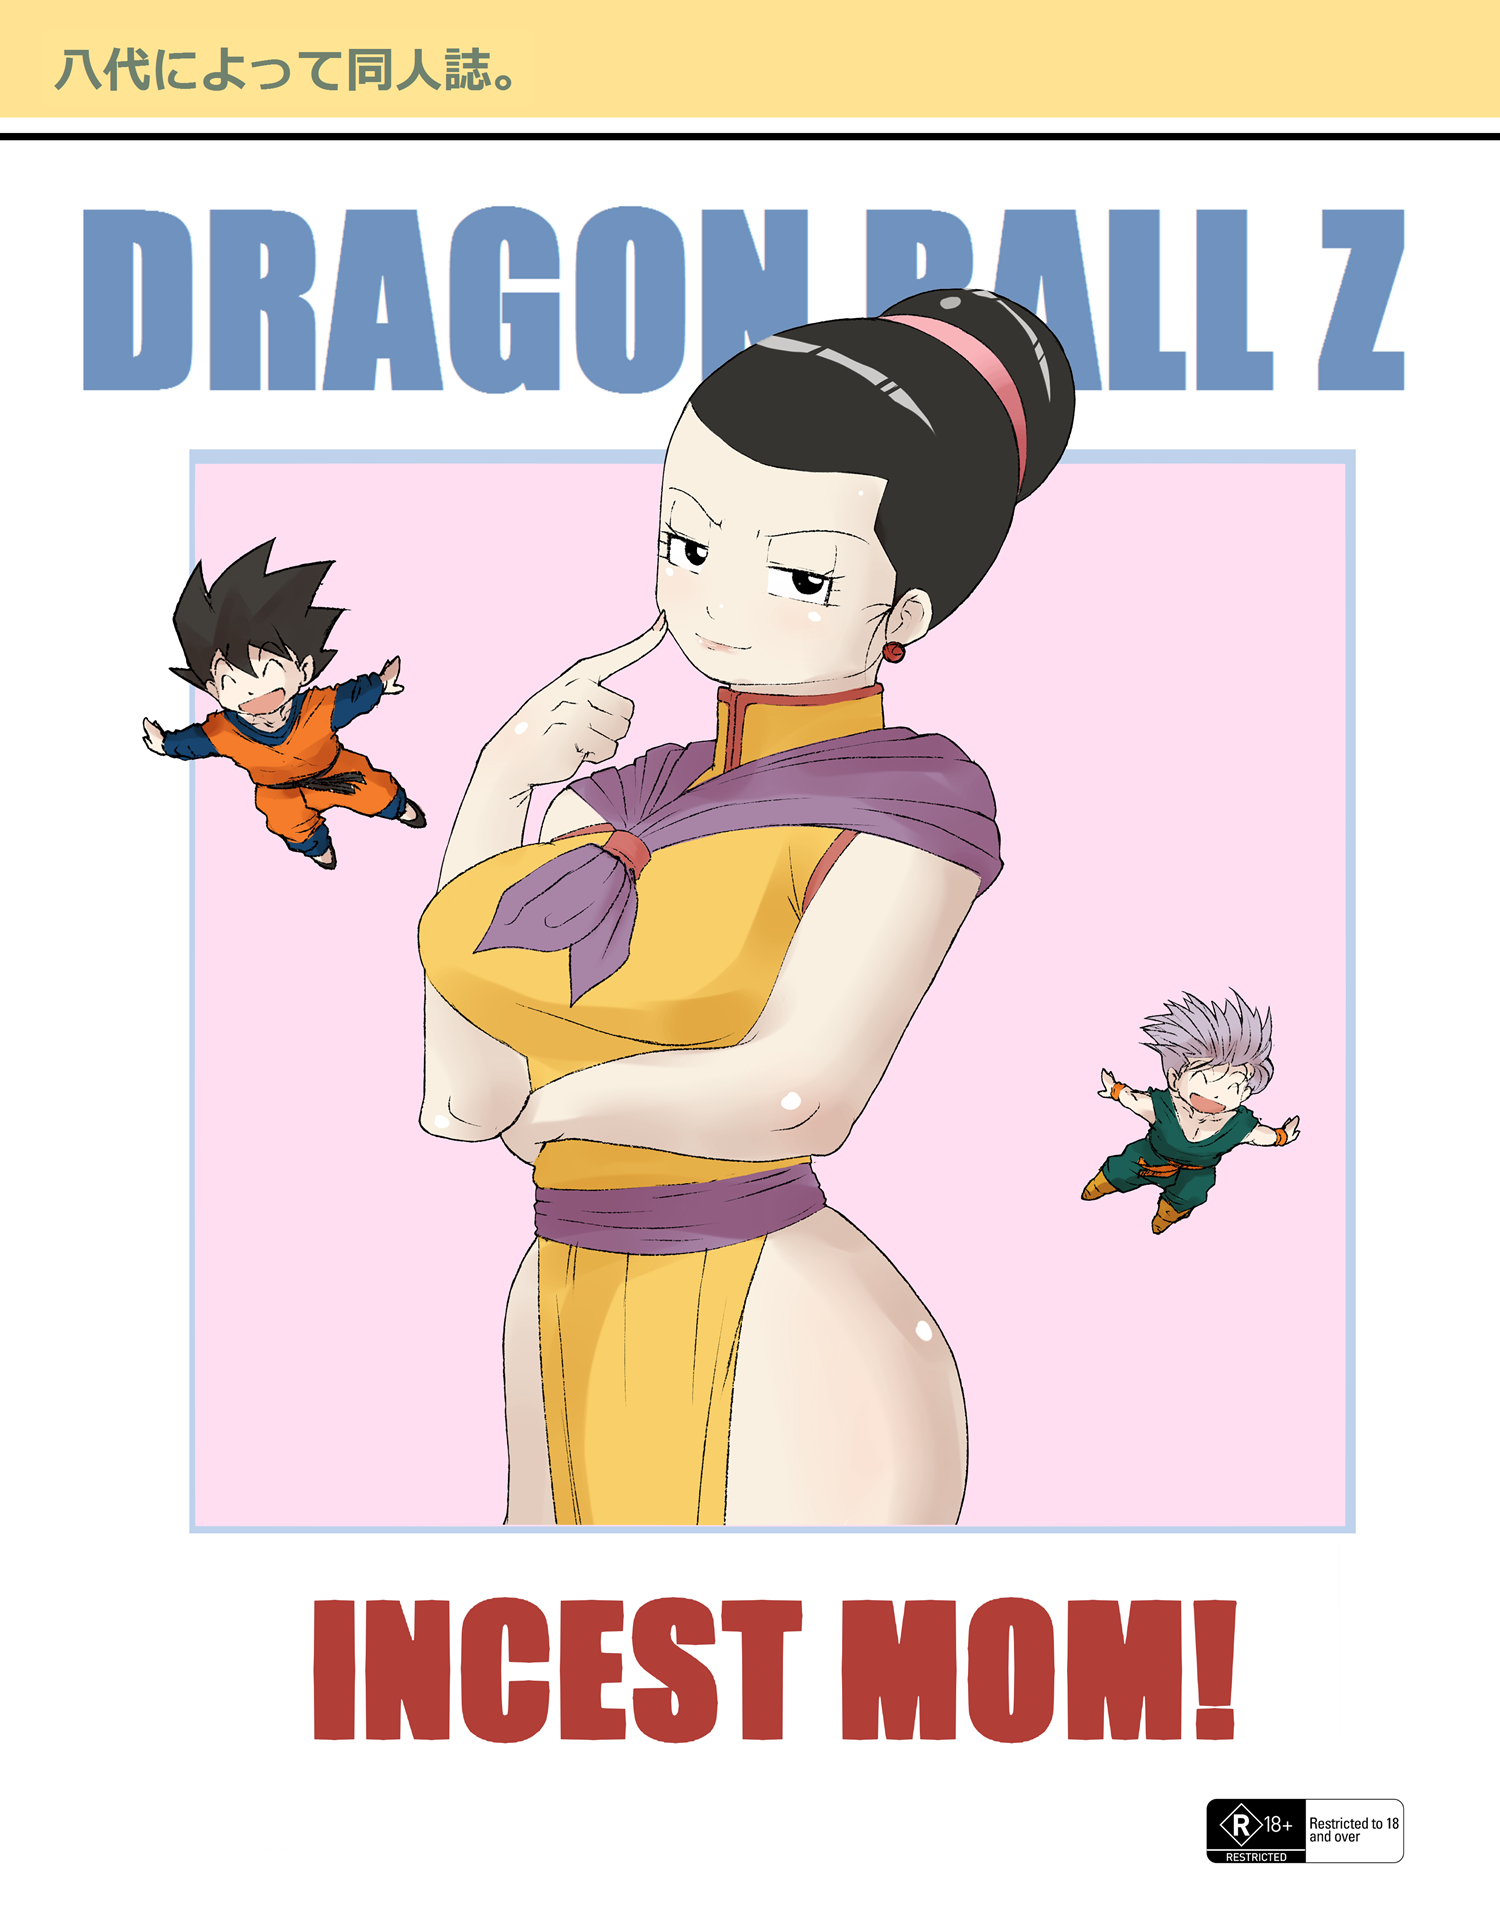 YashiroArt - Incest Mom Dragon Ball Z Ongoing